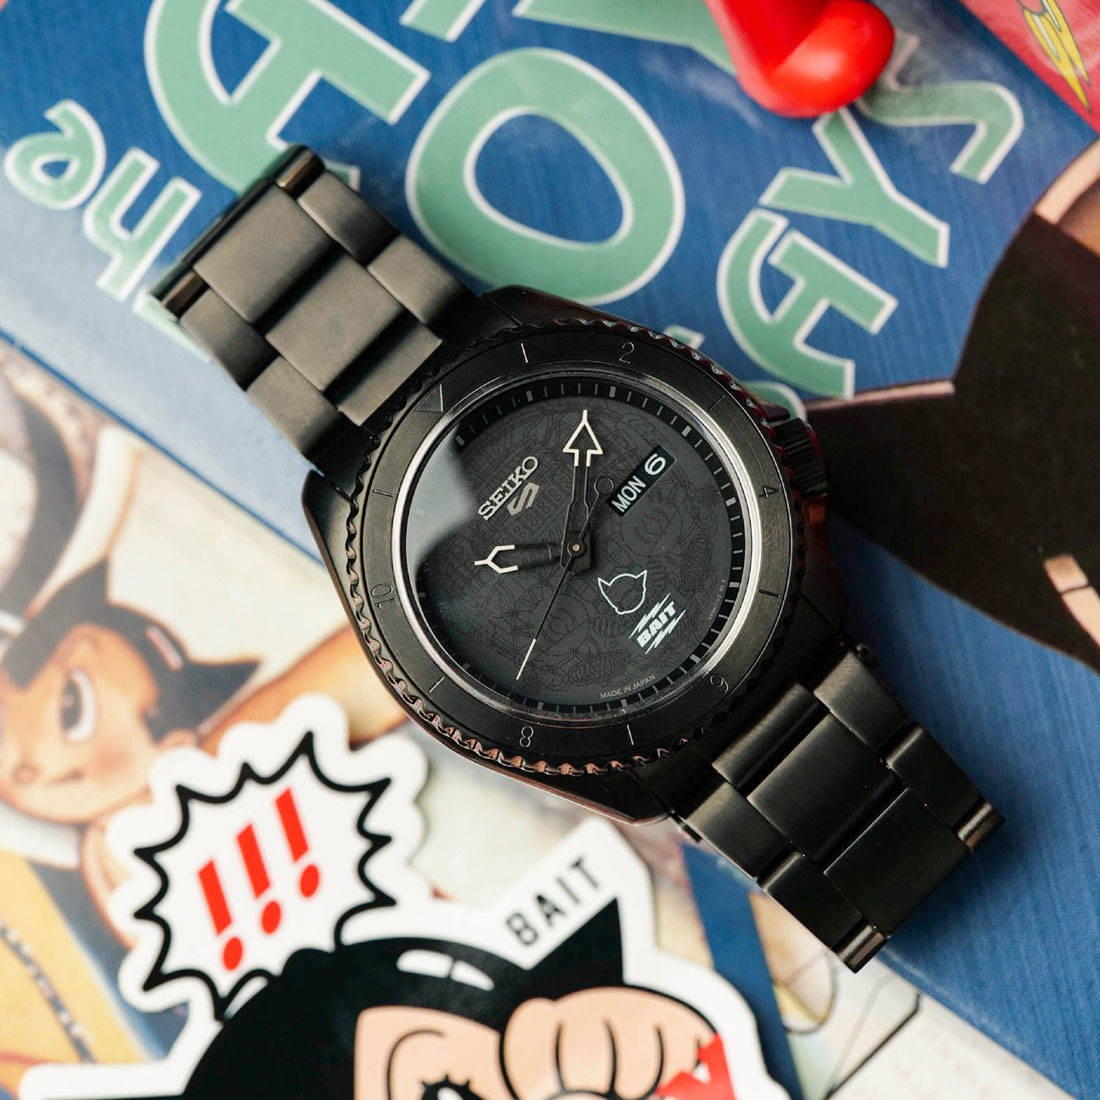 BAIT x Astro Boy x Seiko Caliber 4R36 5 Sports Watch Limited Edition  1876/2000 | eBay